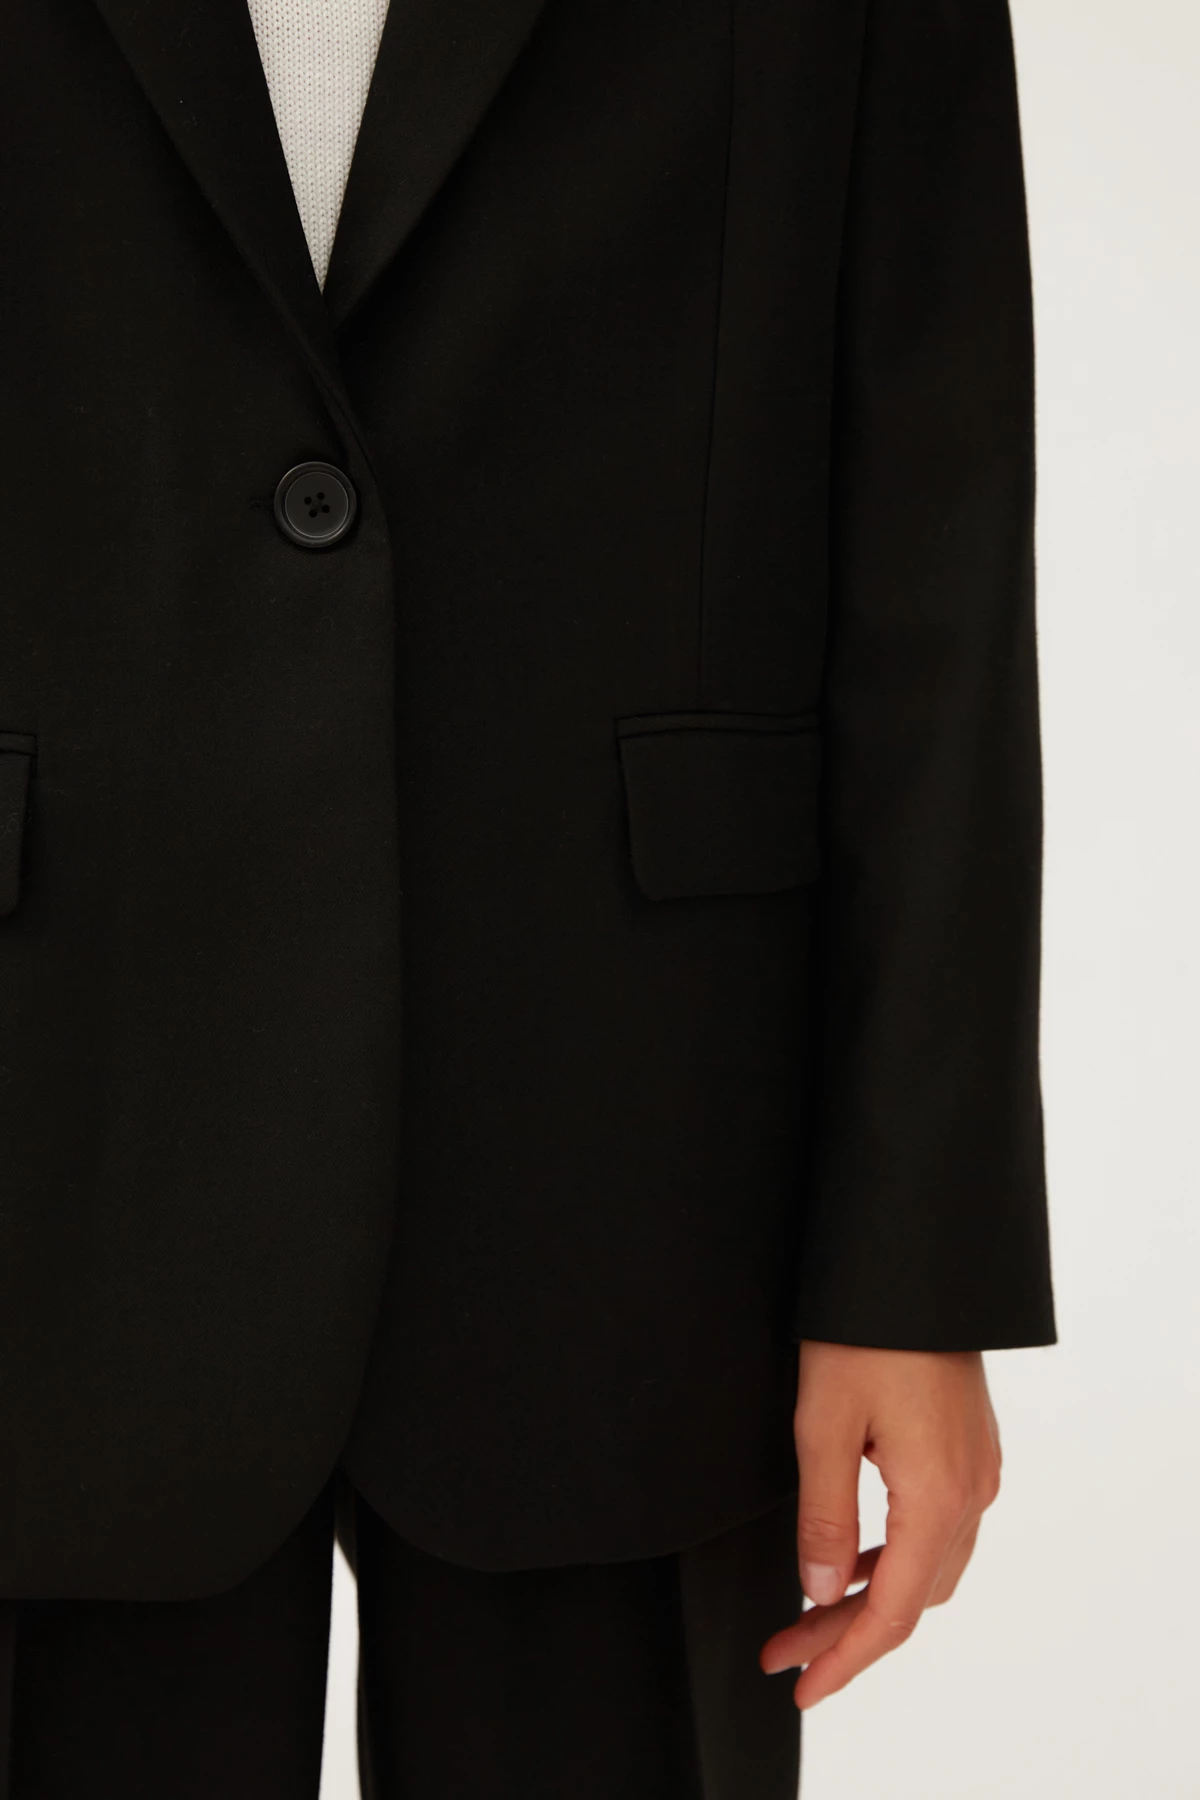 Single-breasted straight-cut black jacket, photo 3